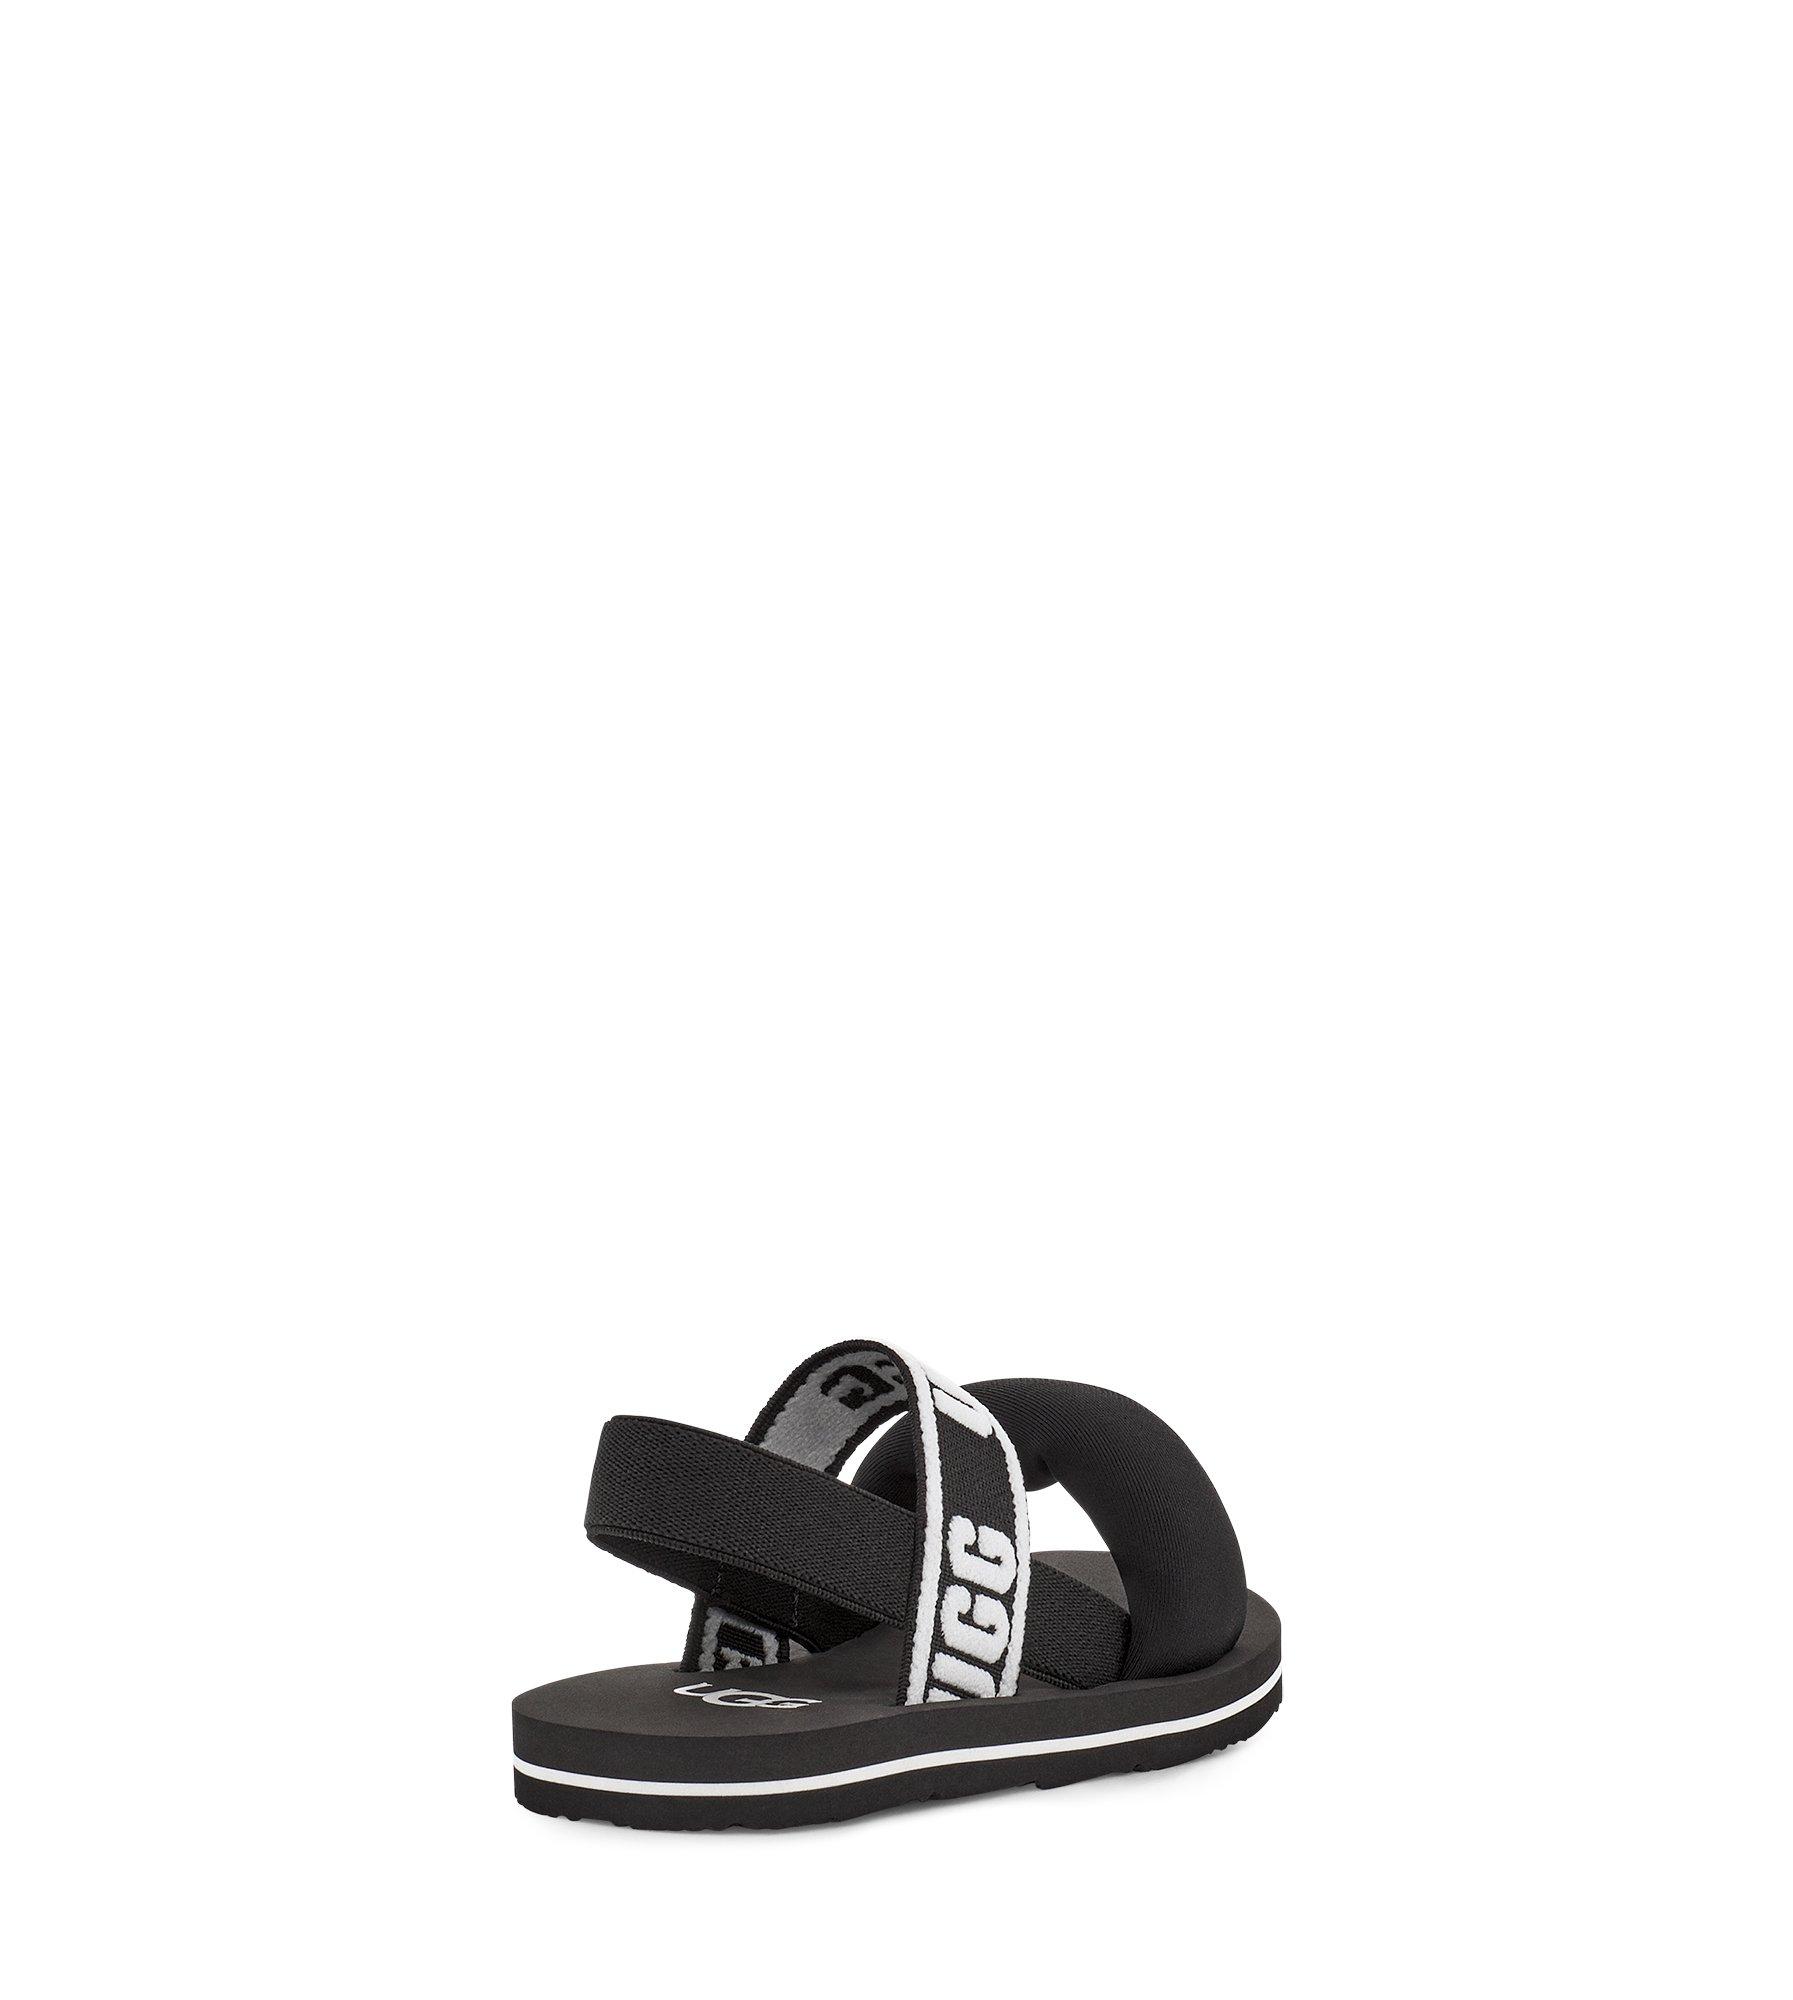 Ugg Girls Zuma sling black sandals size 4 blog.knak.jp